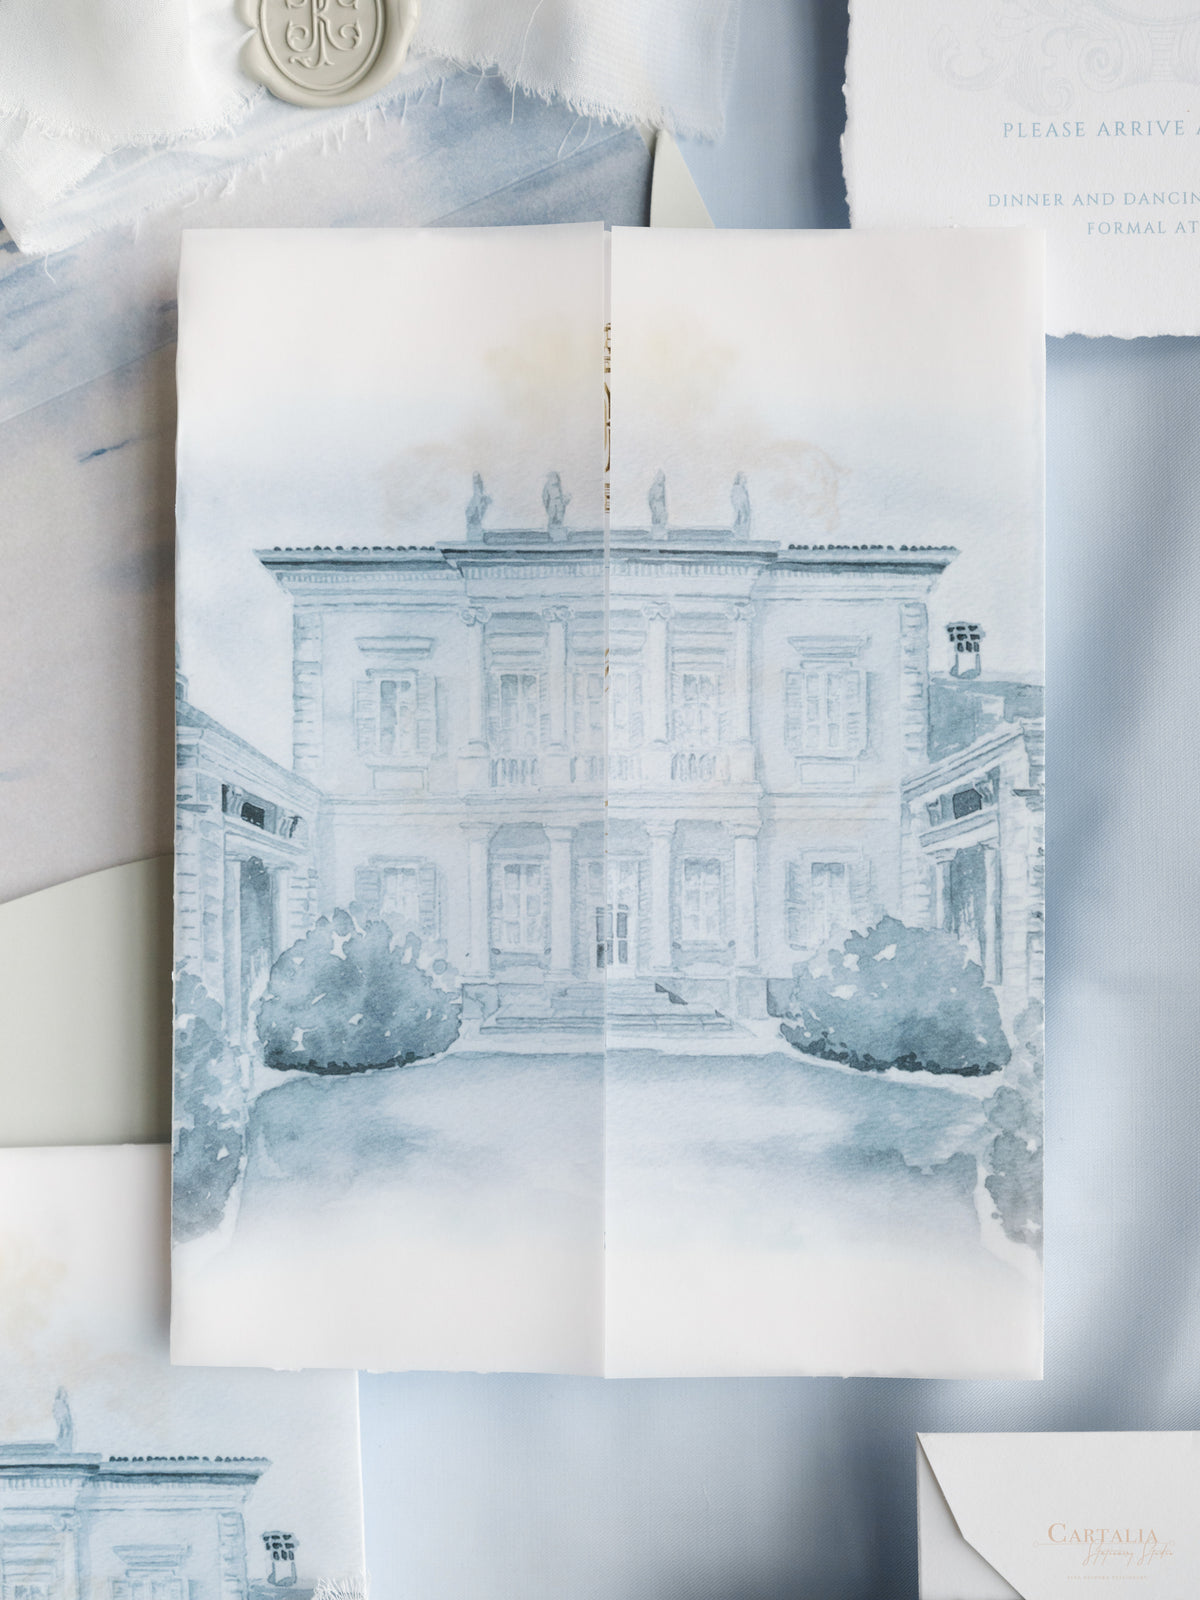 Watercolor Vellum Wrap Invitation Suite with Gold Foil Monogram & Custom Wax Seal | Villa Carminati Resta | Bespoke Commission J&K